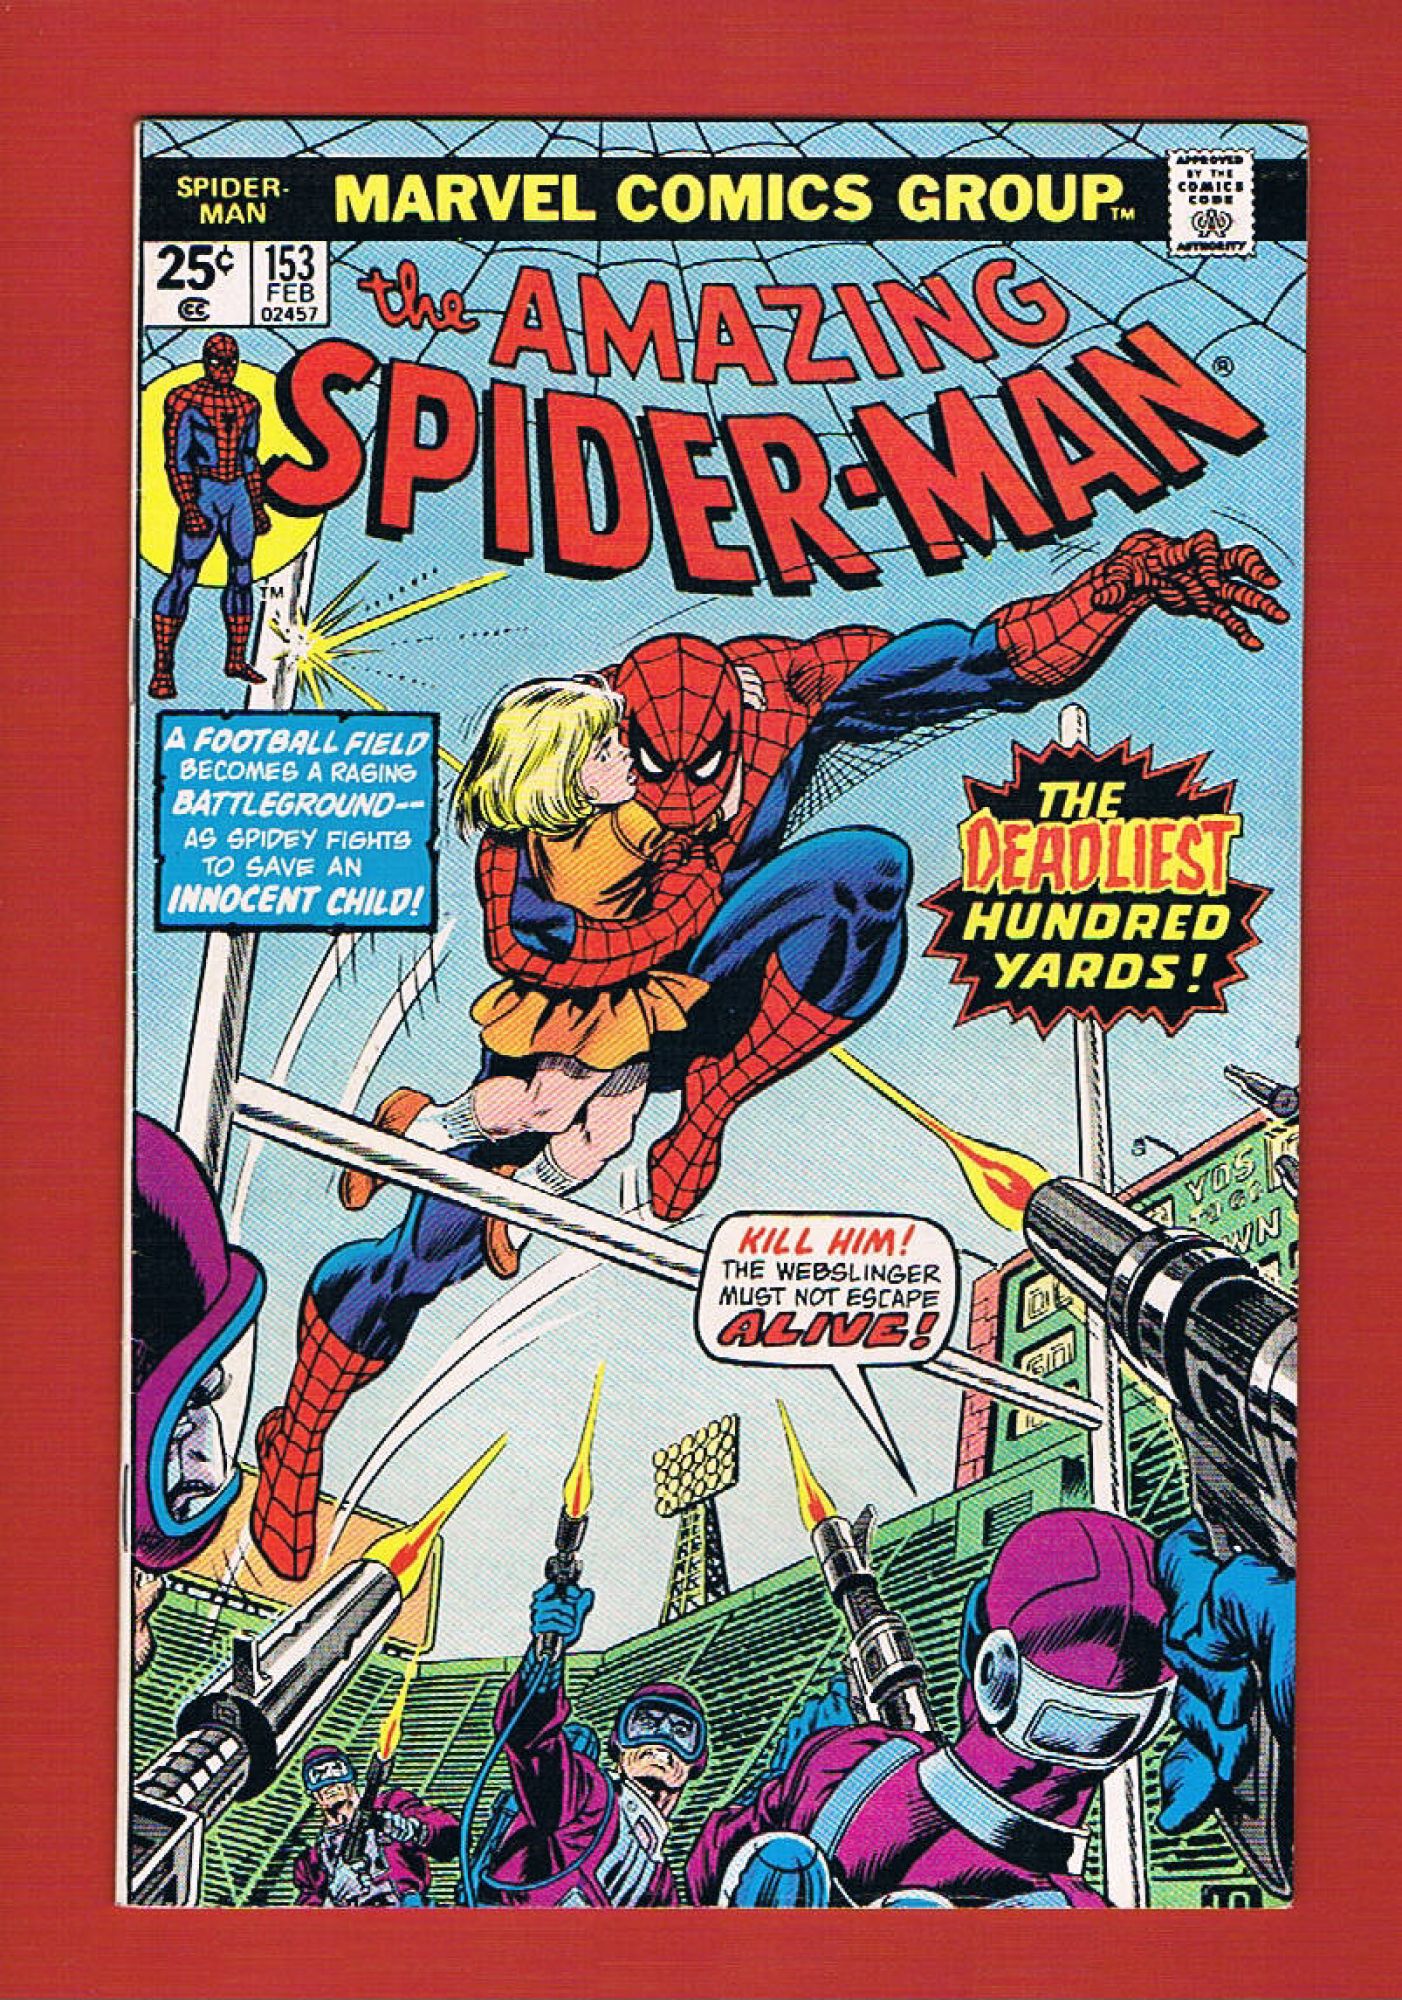 Amazing Spider-Man #153, Feb 1976, 6.0 FN